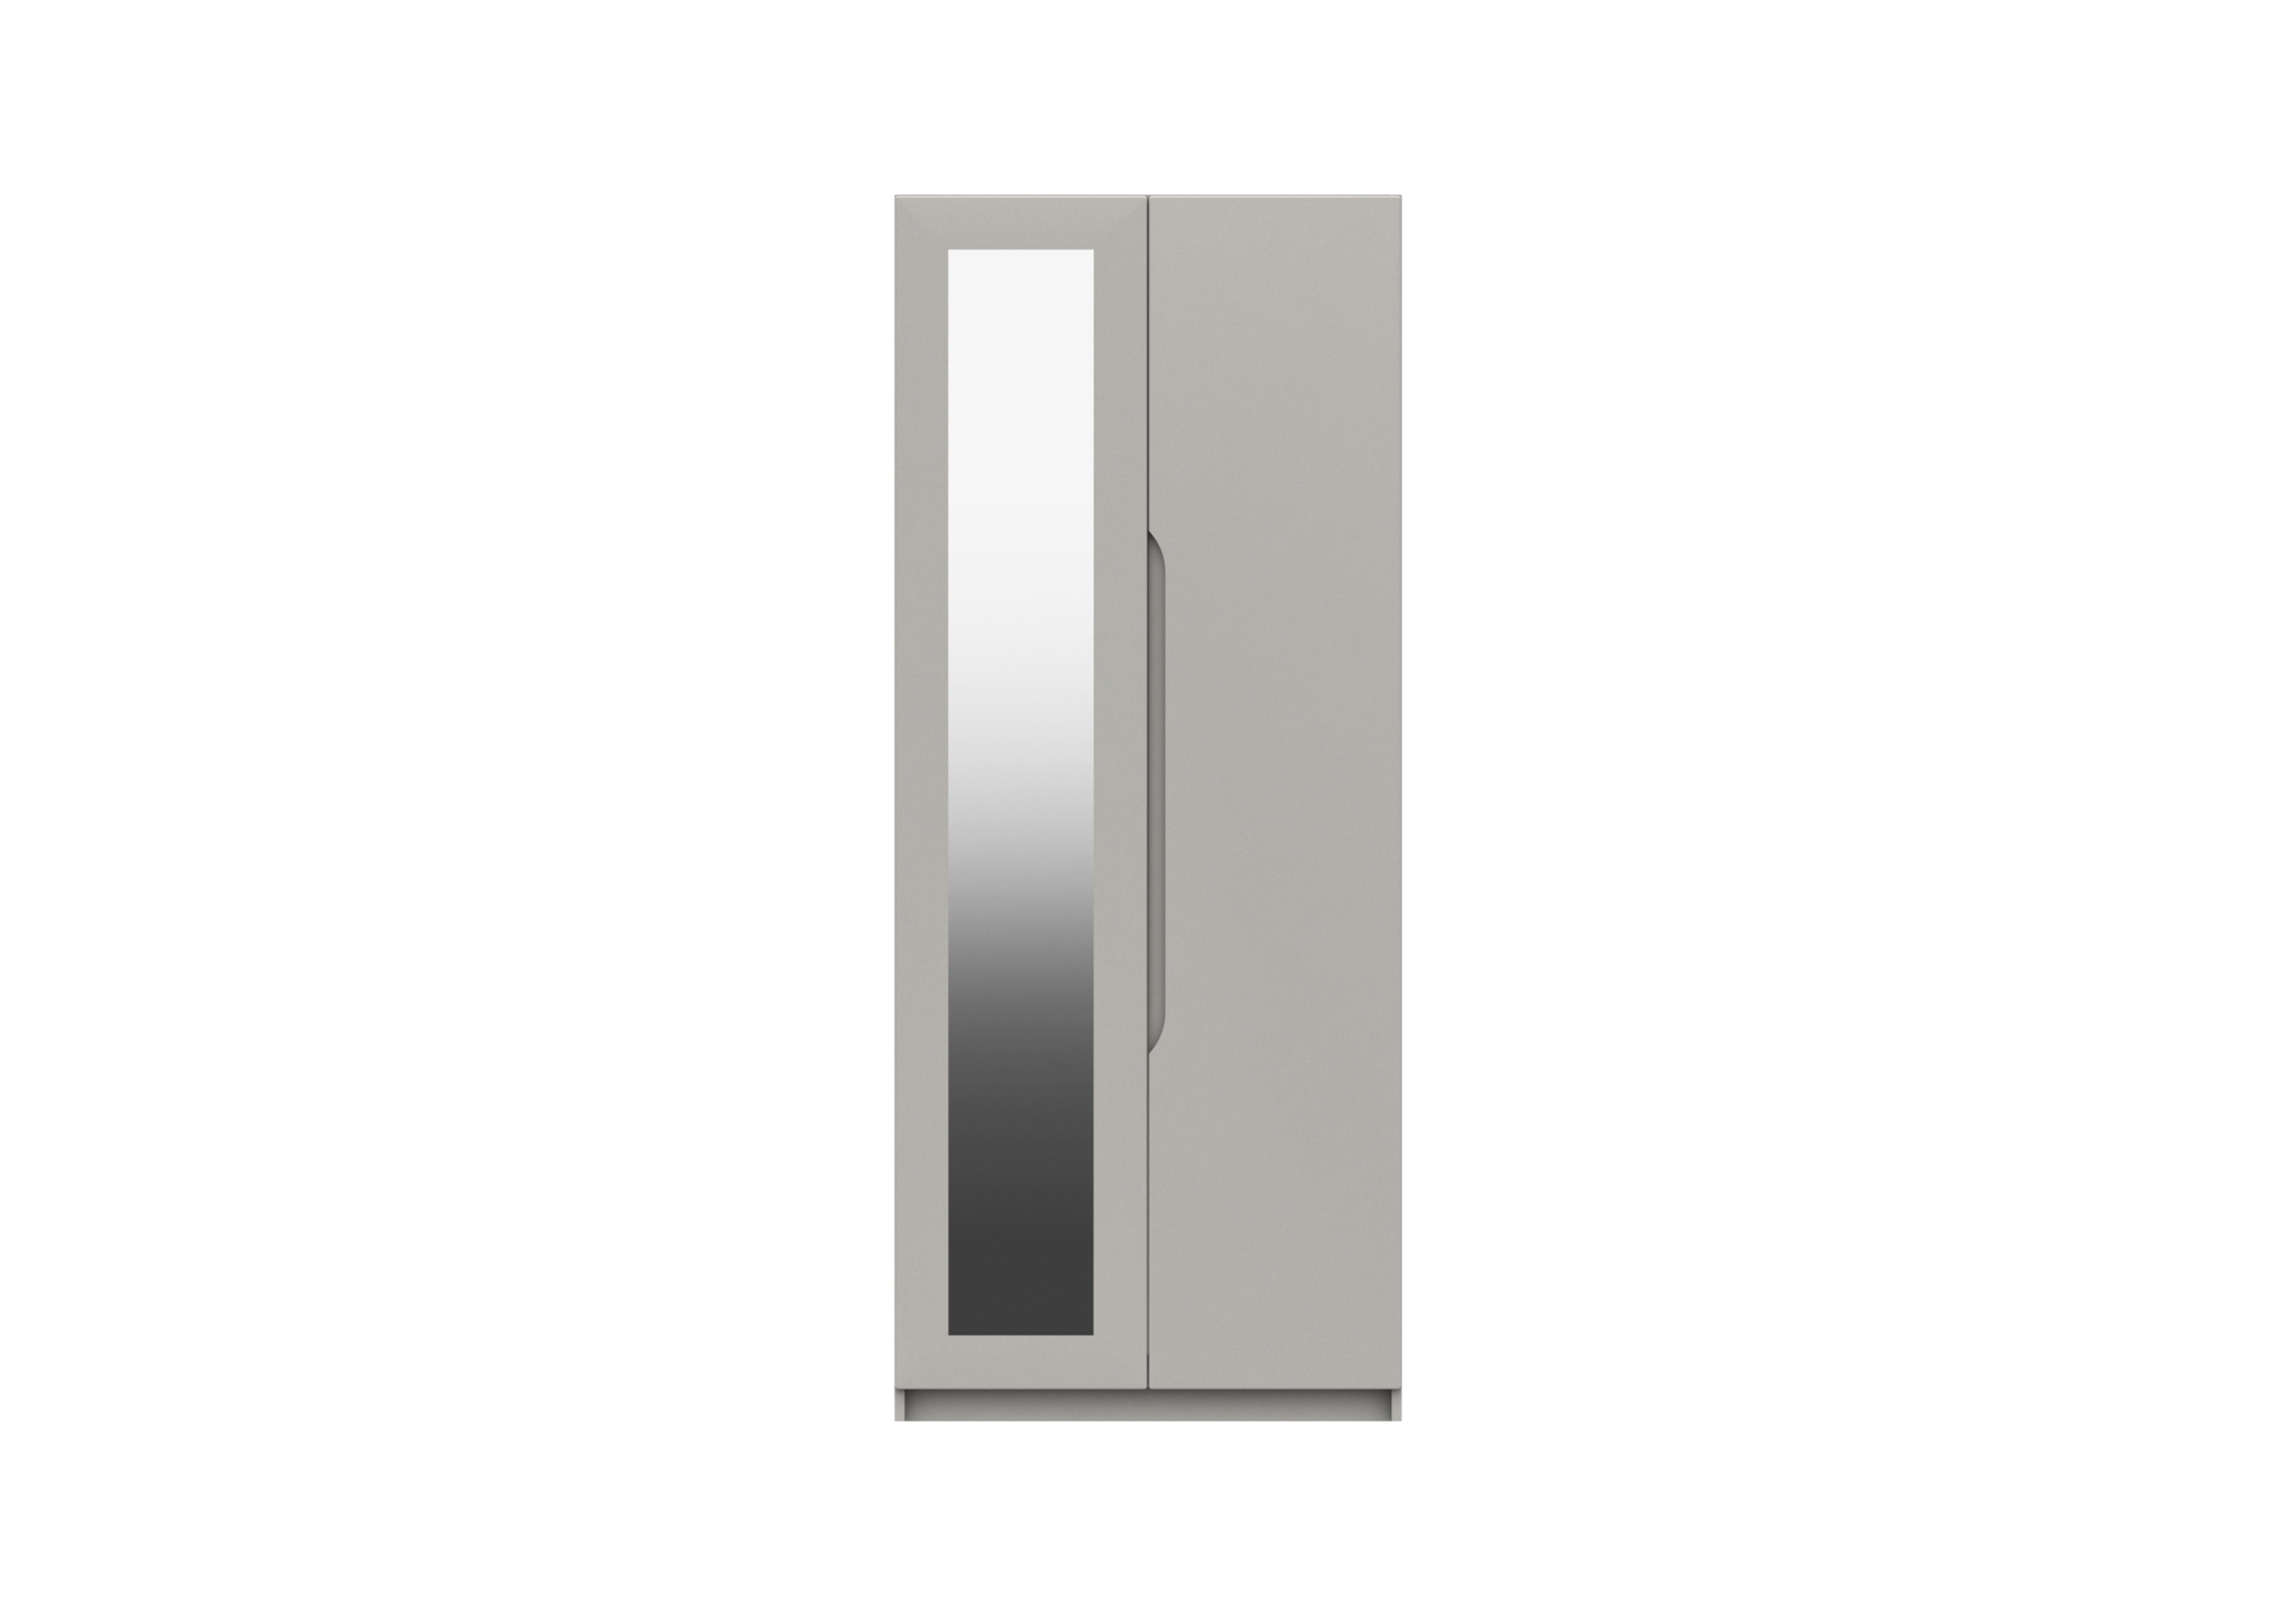 St Pancras 2 Door Wardrobe with Mirror in Light Grey Gloss on Furniture Village